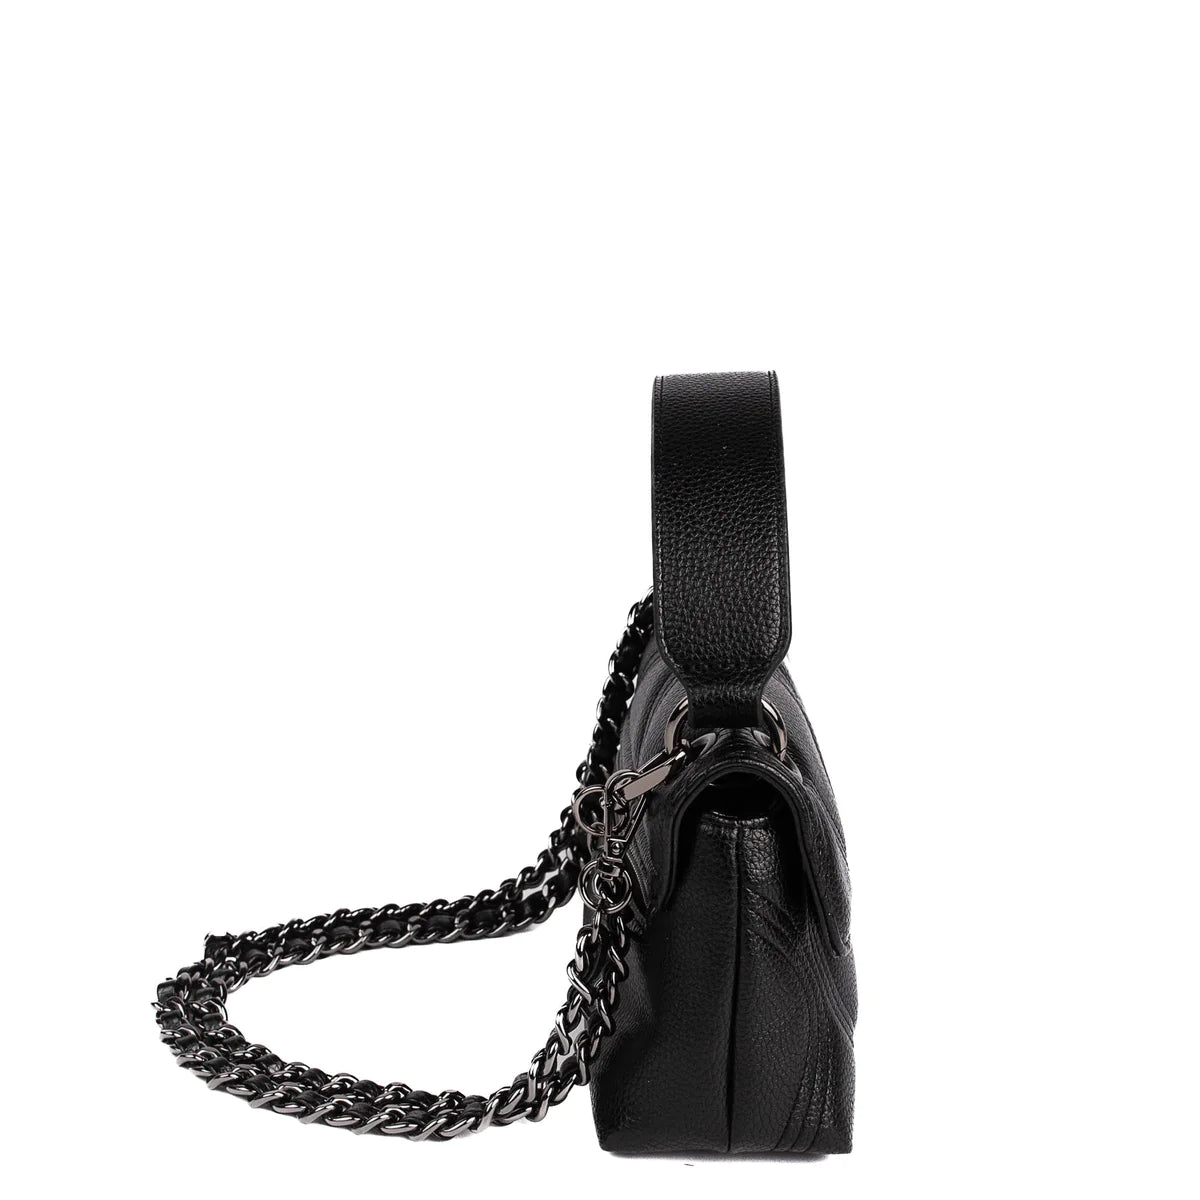 LUG Cadence Mini Classic VL Crossbody Bag in Black